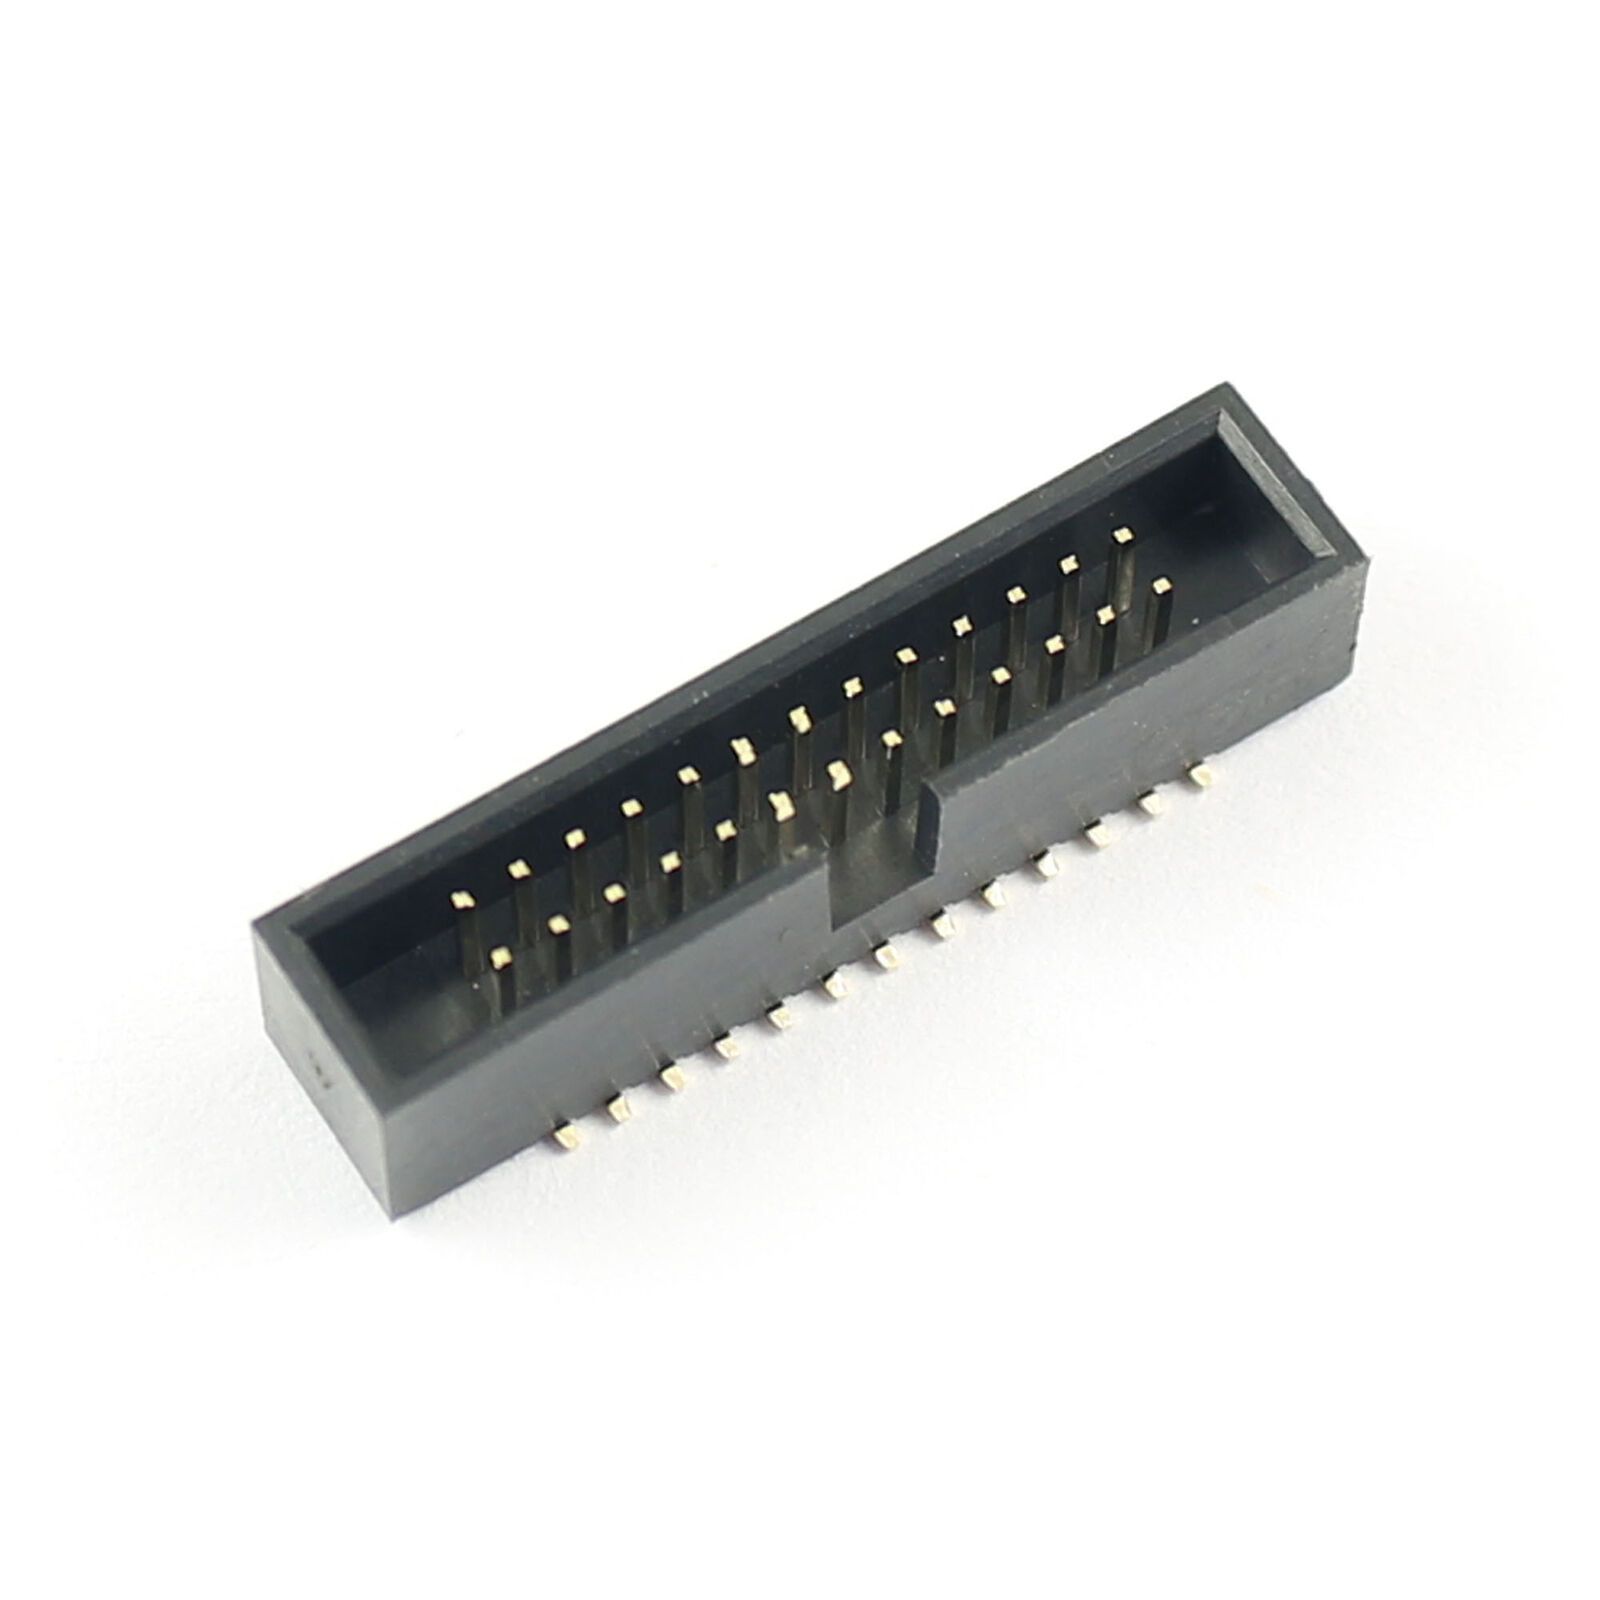 Pin header 2x13 pin 1.27mm pitch met mantel SMD zwart